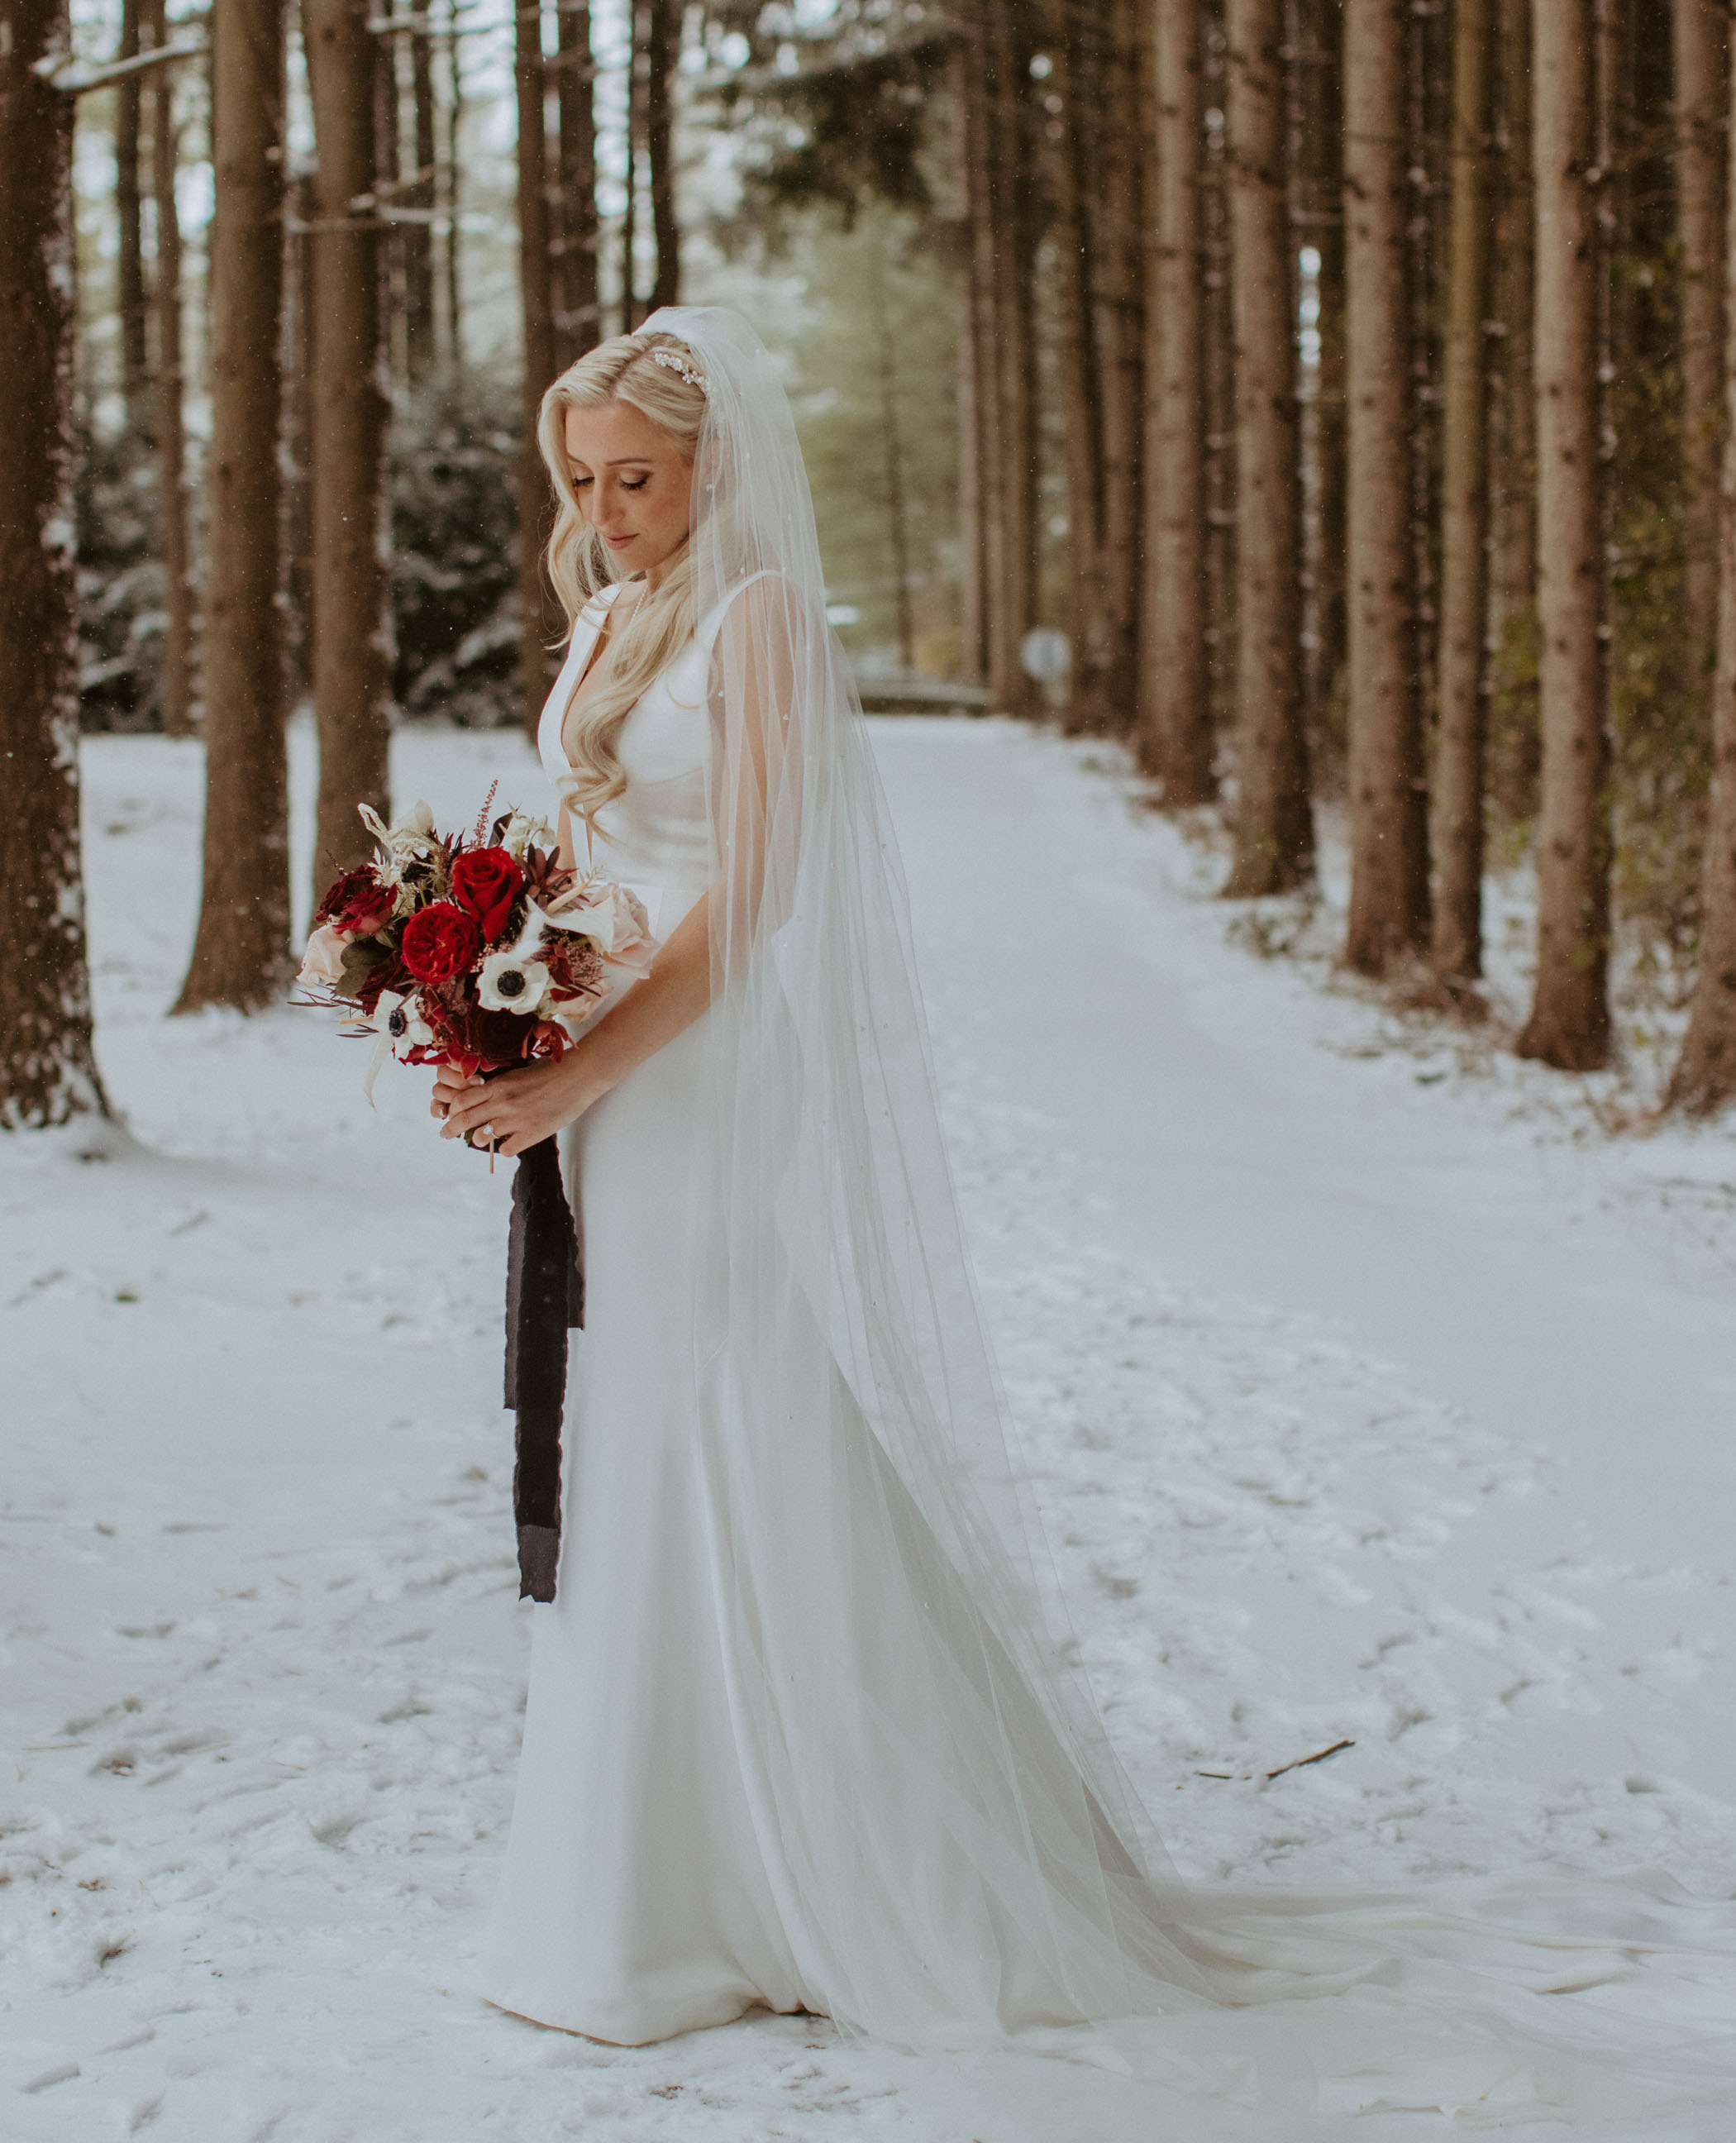 Bride in the snow